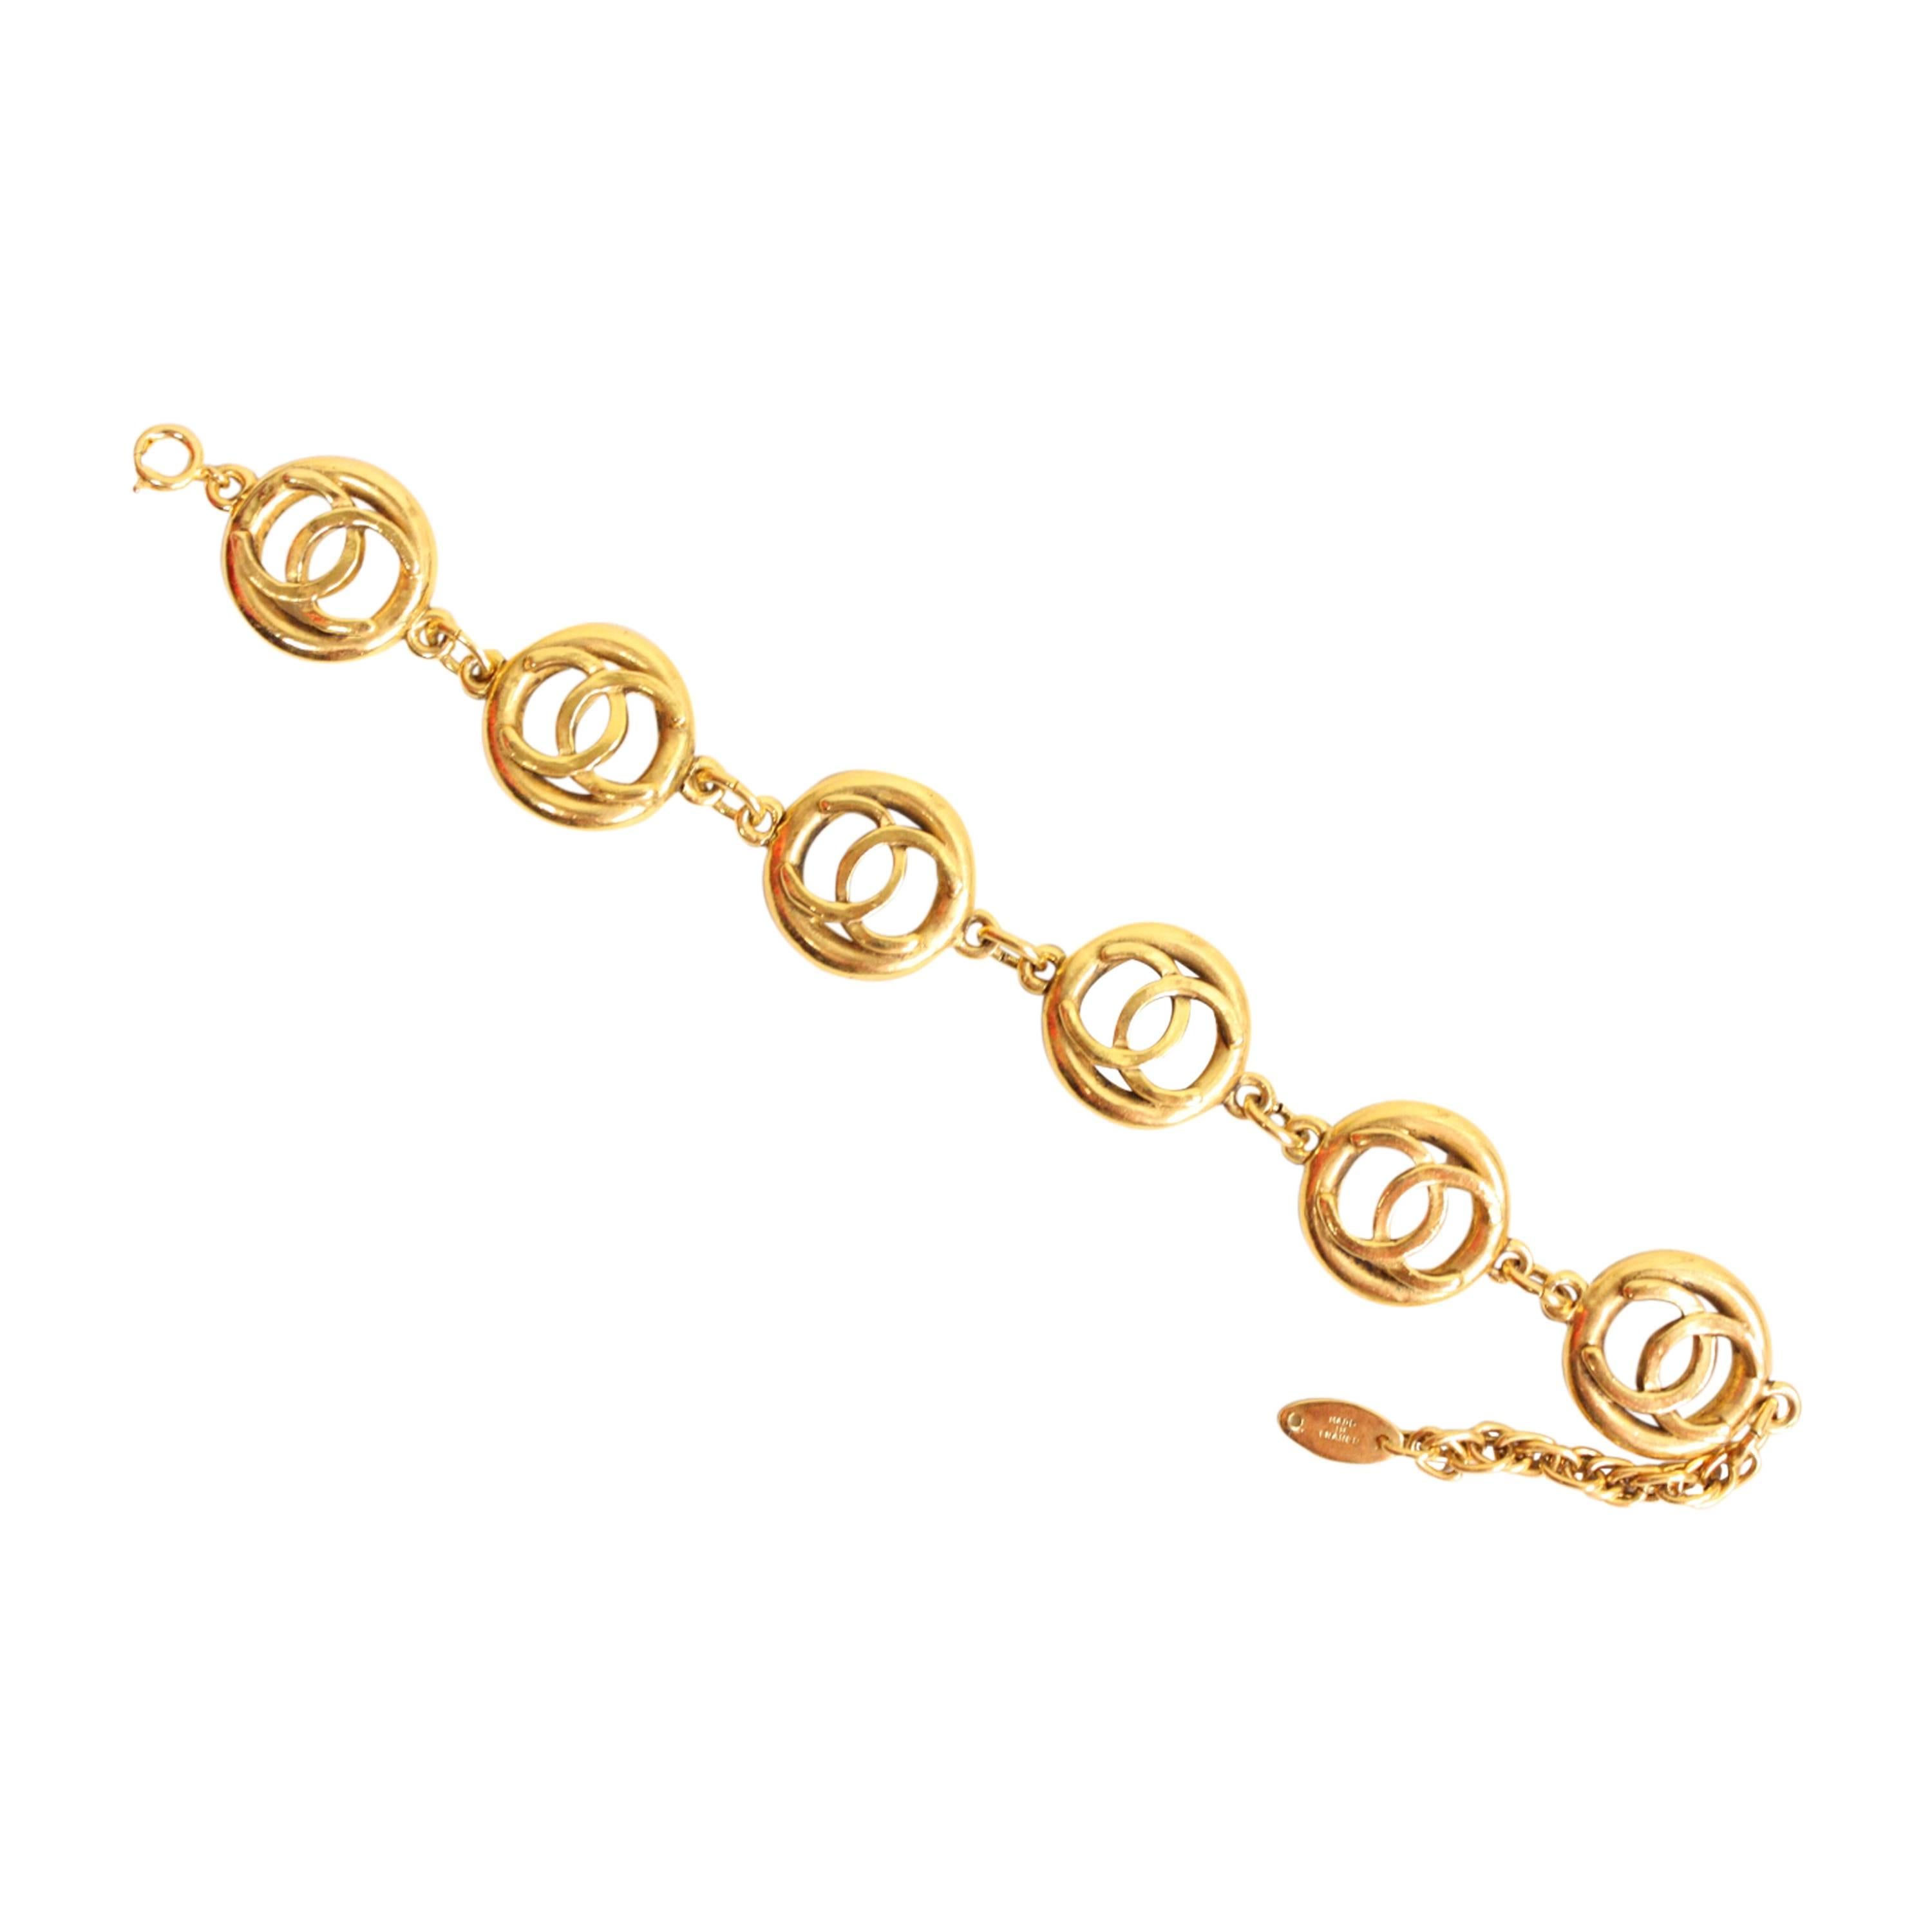 1980's Chanel Gold-Toned Bracelet